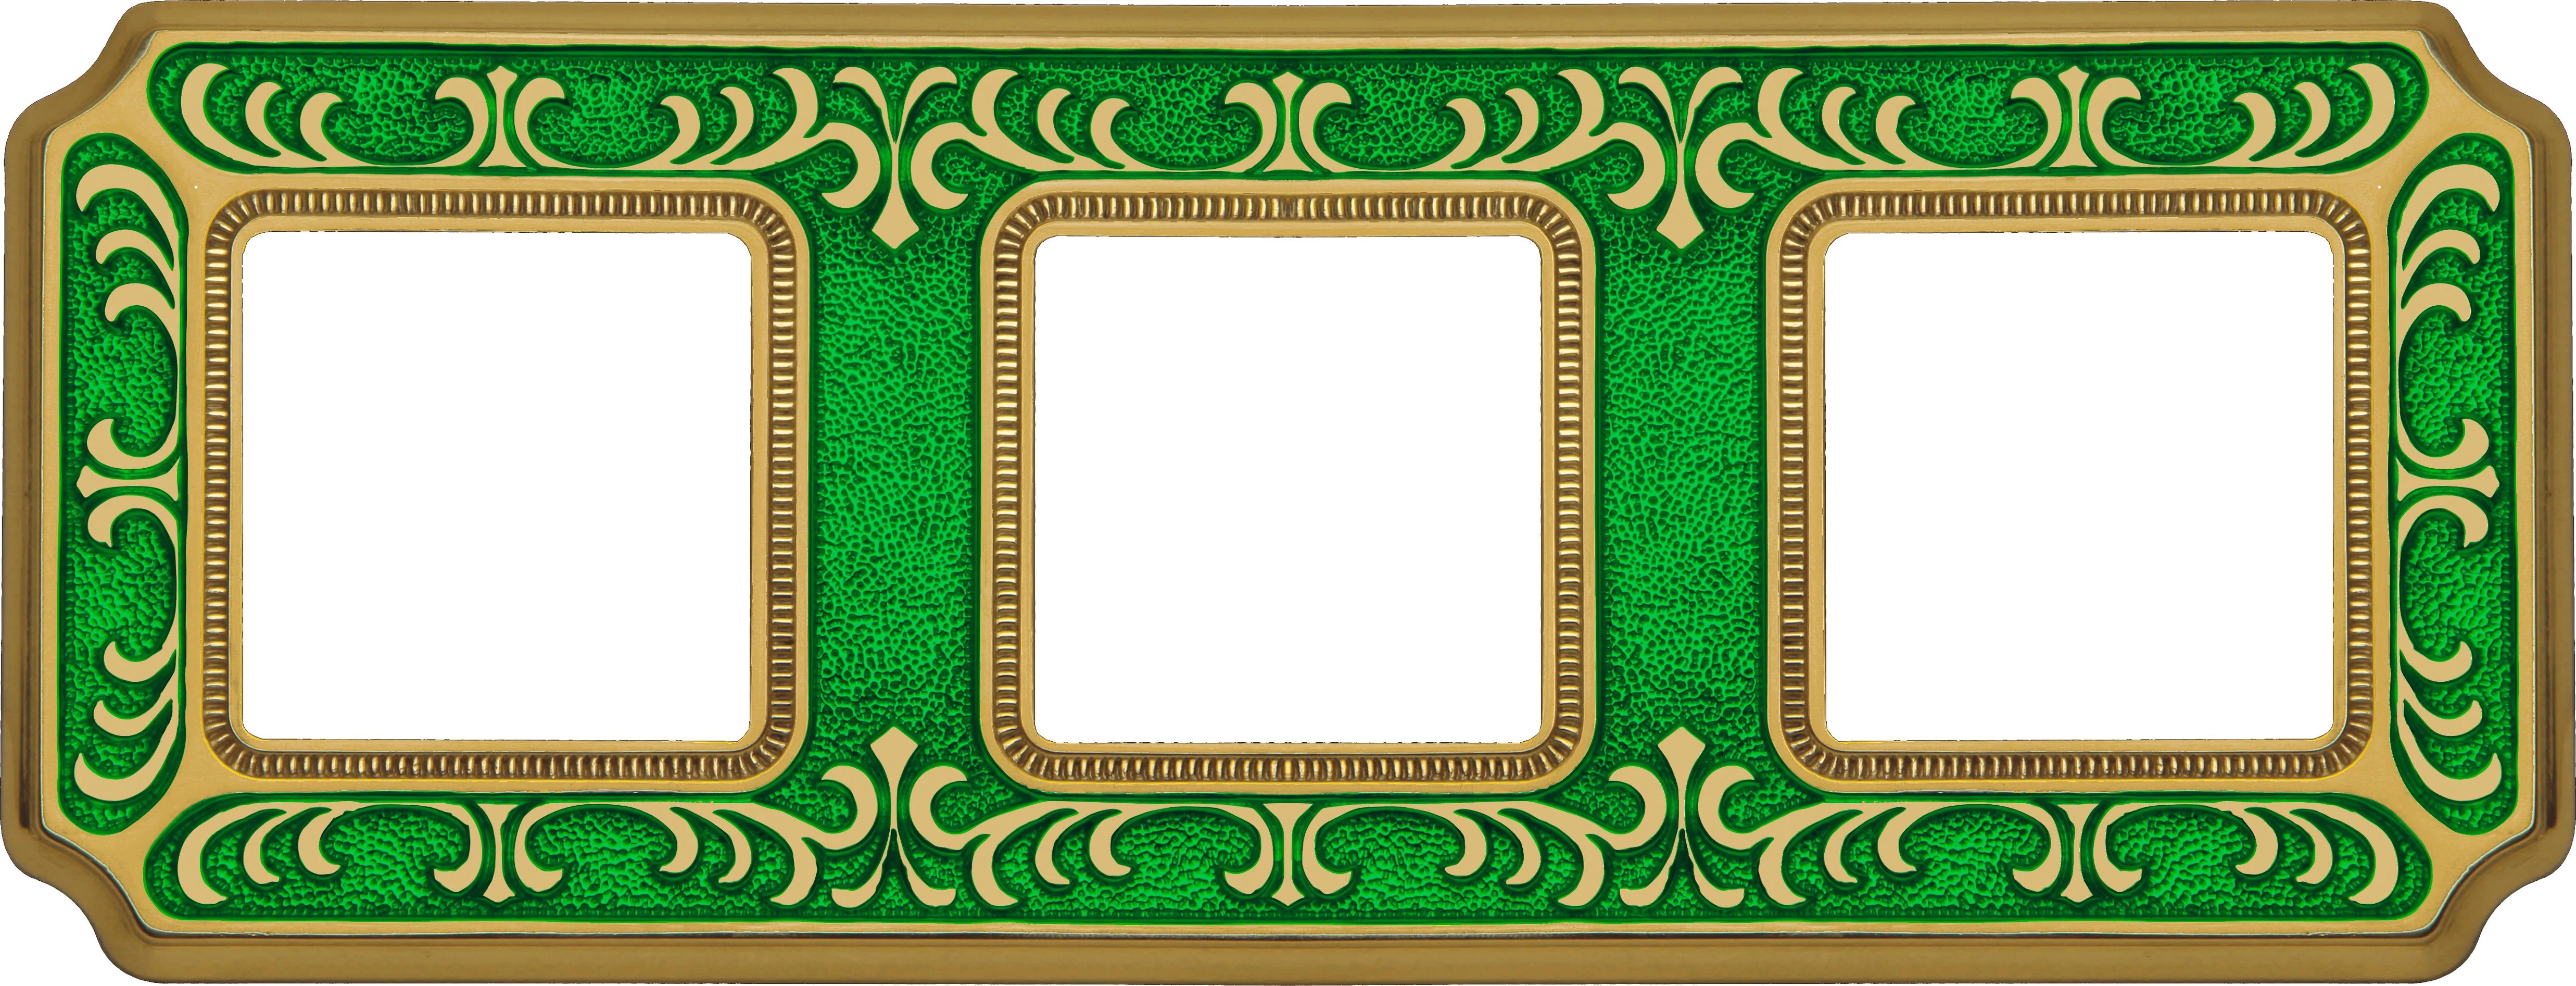 артикул FD01353VEEN название Рамка 3-ая (тройная), Fede, Серия Siena, Изумрудно-зеленый